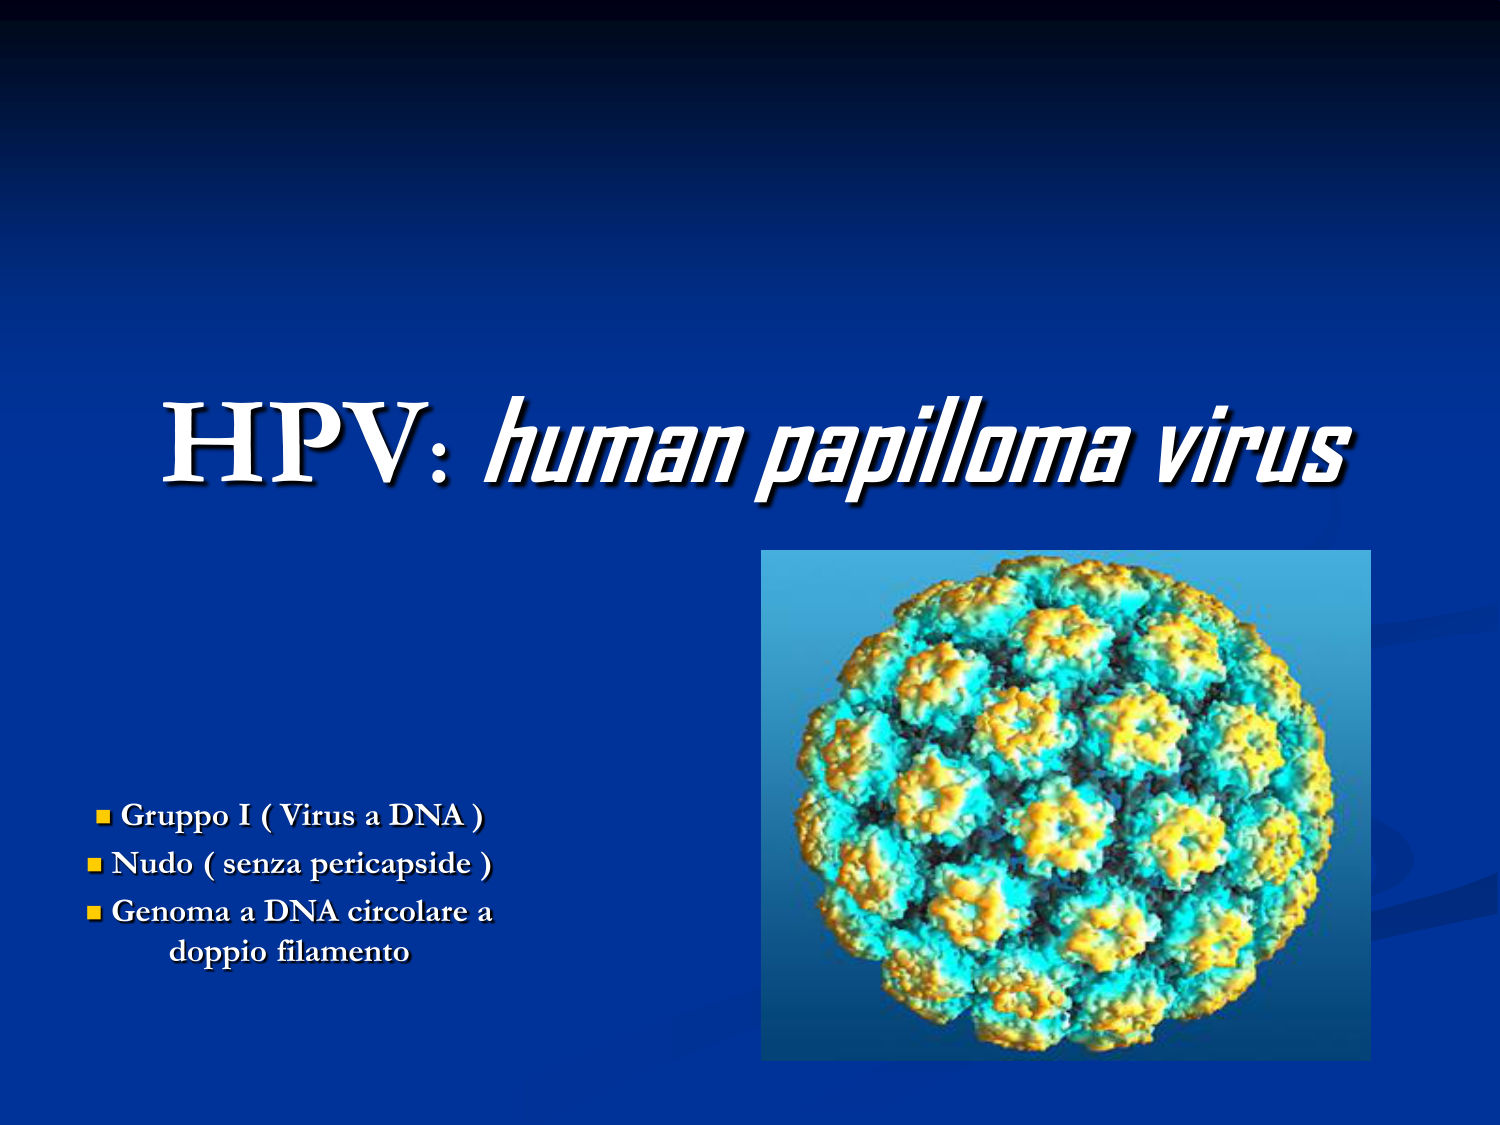 Hpv virus rna or dna. Papilloma virus rna, Papilloma virus rna